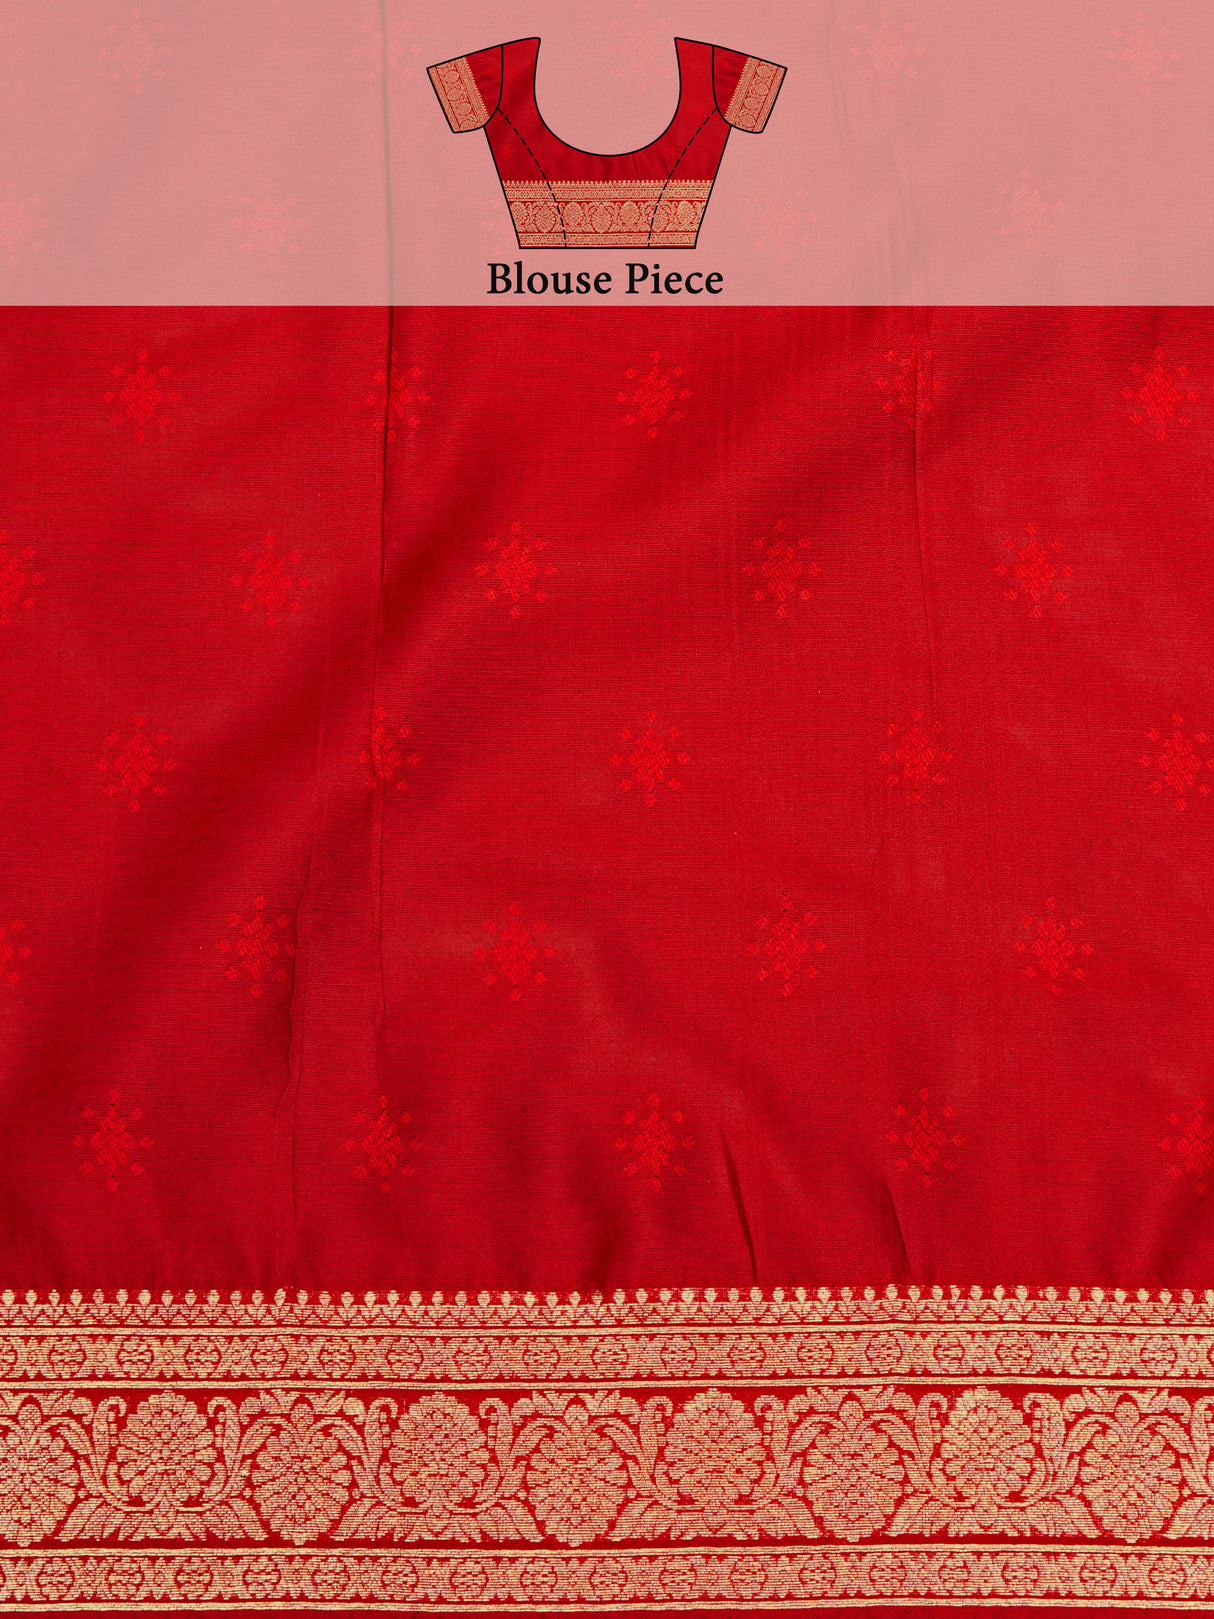 Mimosa Women's Woven Design Patola Style Art Silk Saree With Blouse Piece : SA00001346GRNFREE